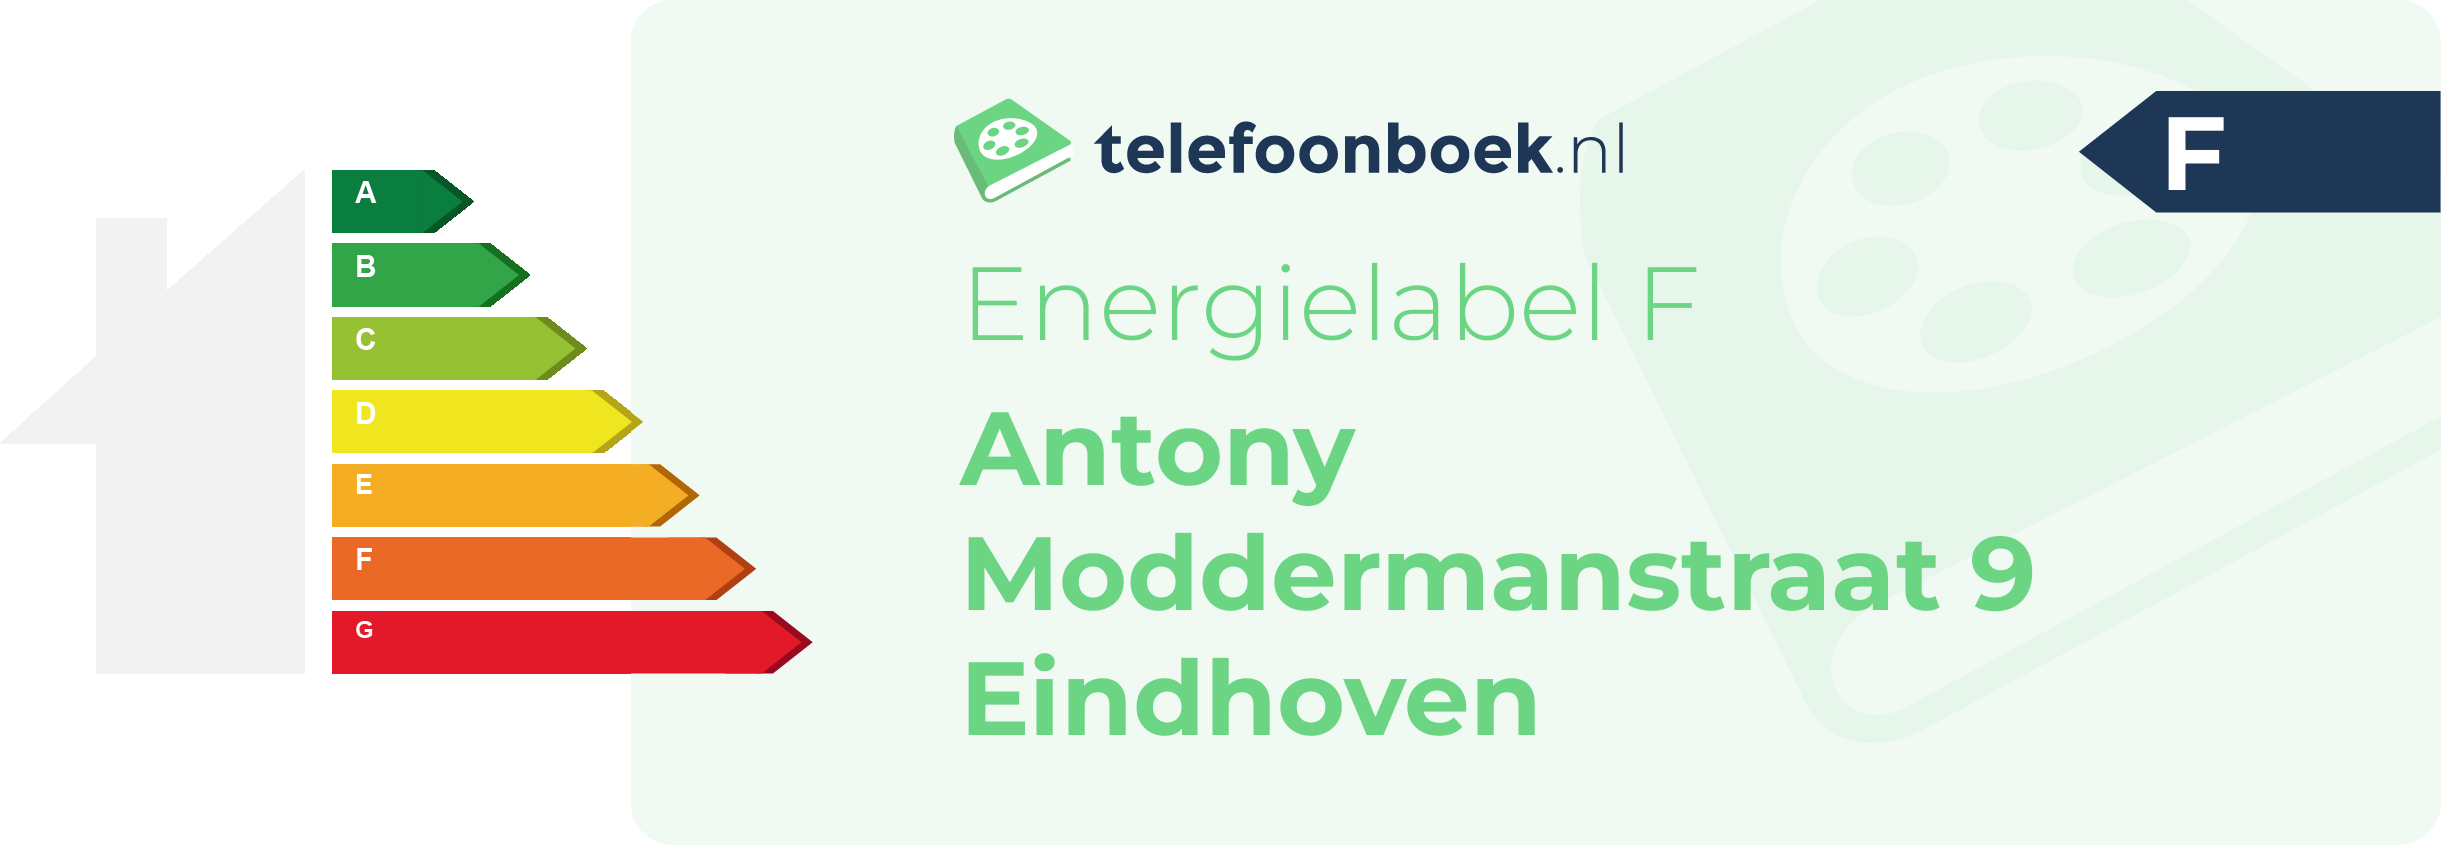 Energielabel Antony Moddermanstraat 9 Eindhoven